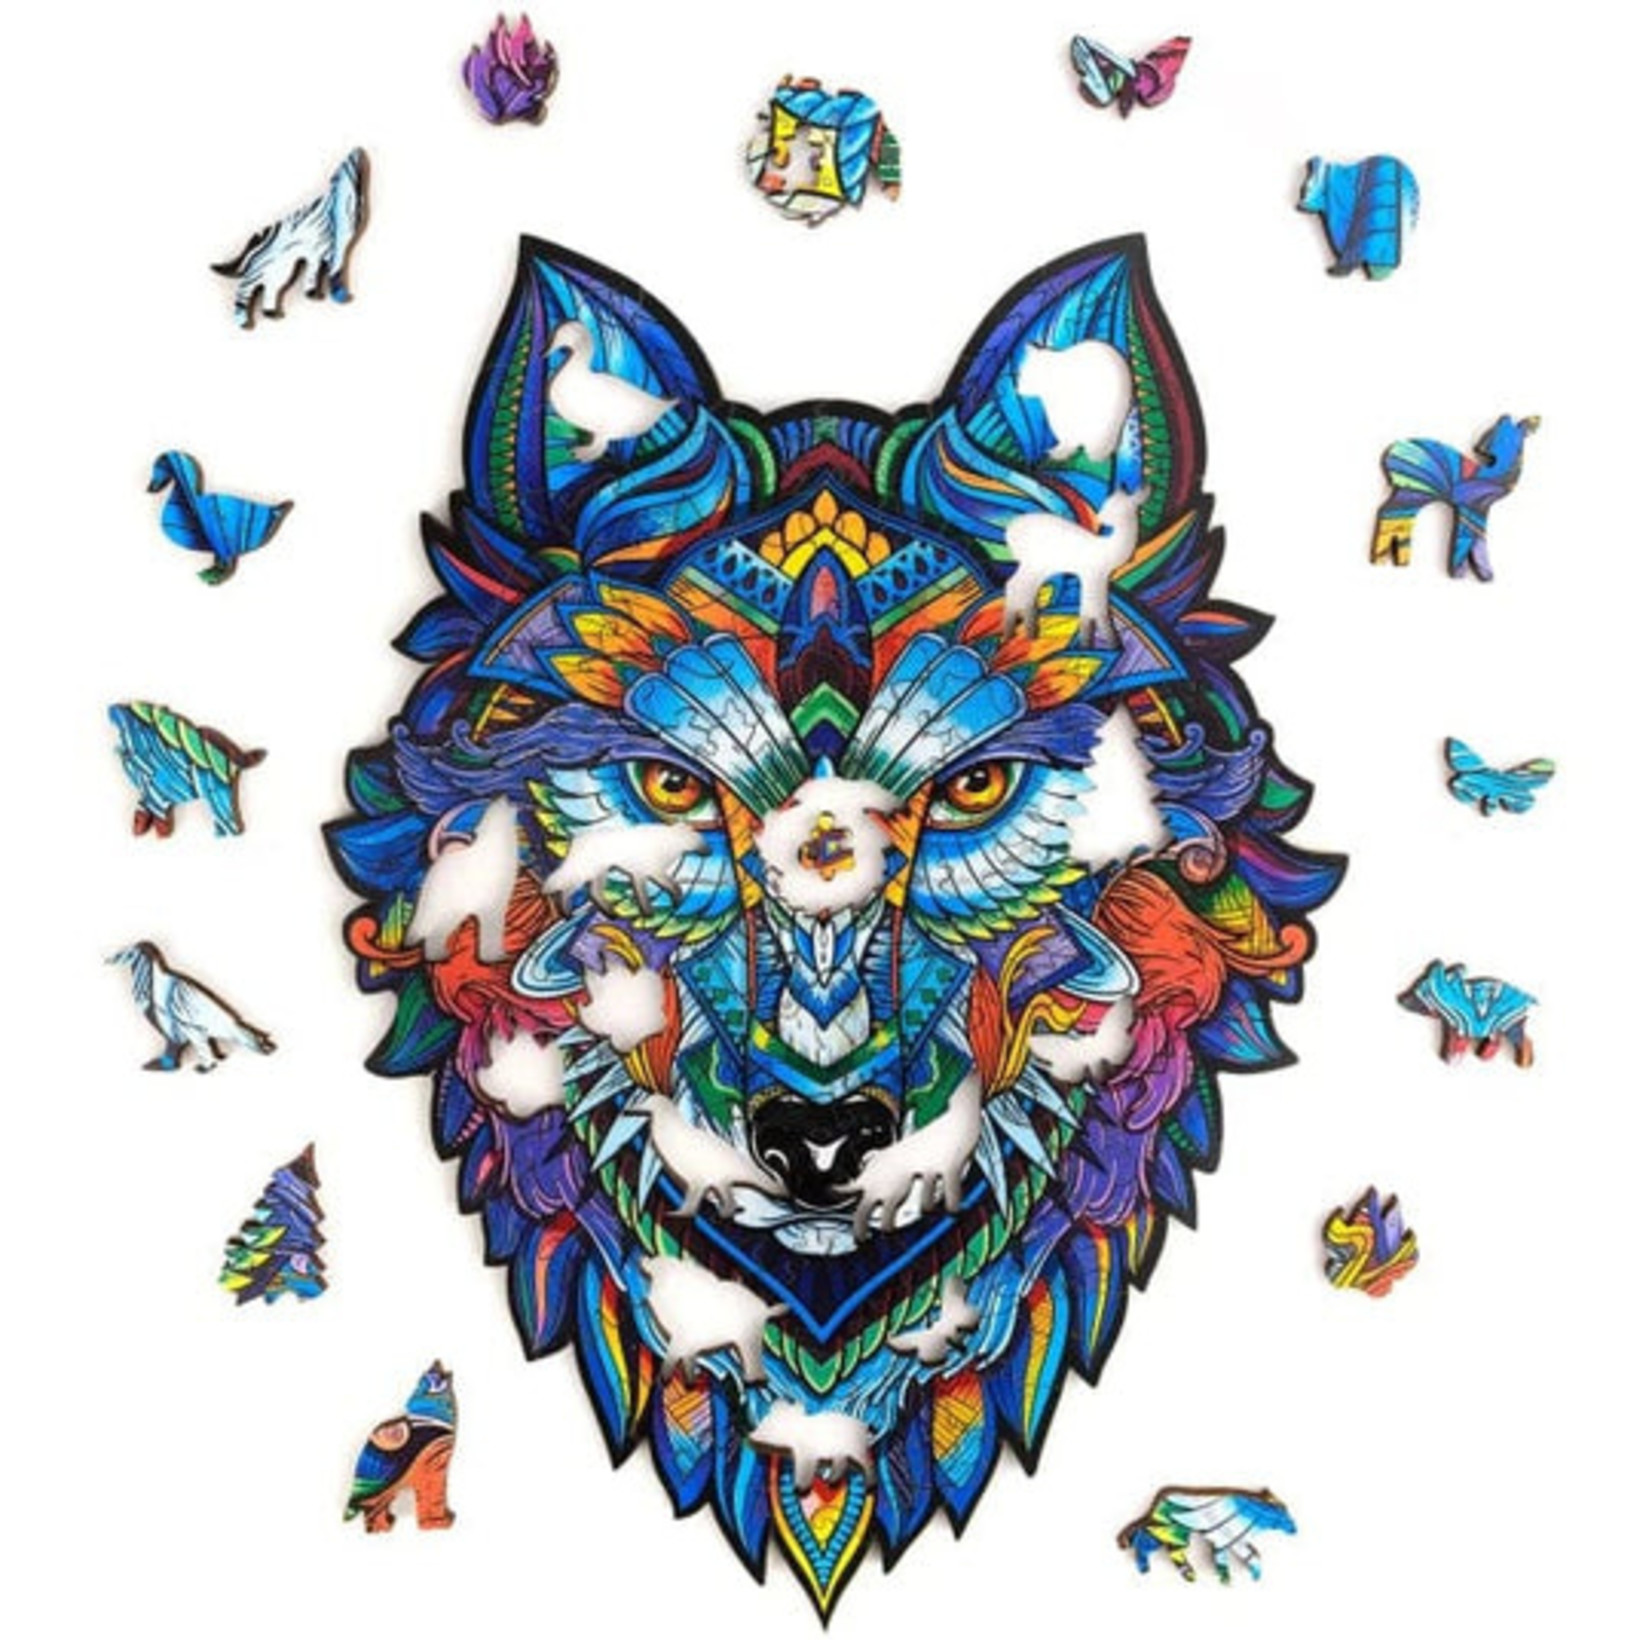 Unidragon Wood Puzzle - Majestic Wolf -